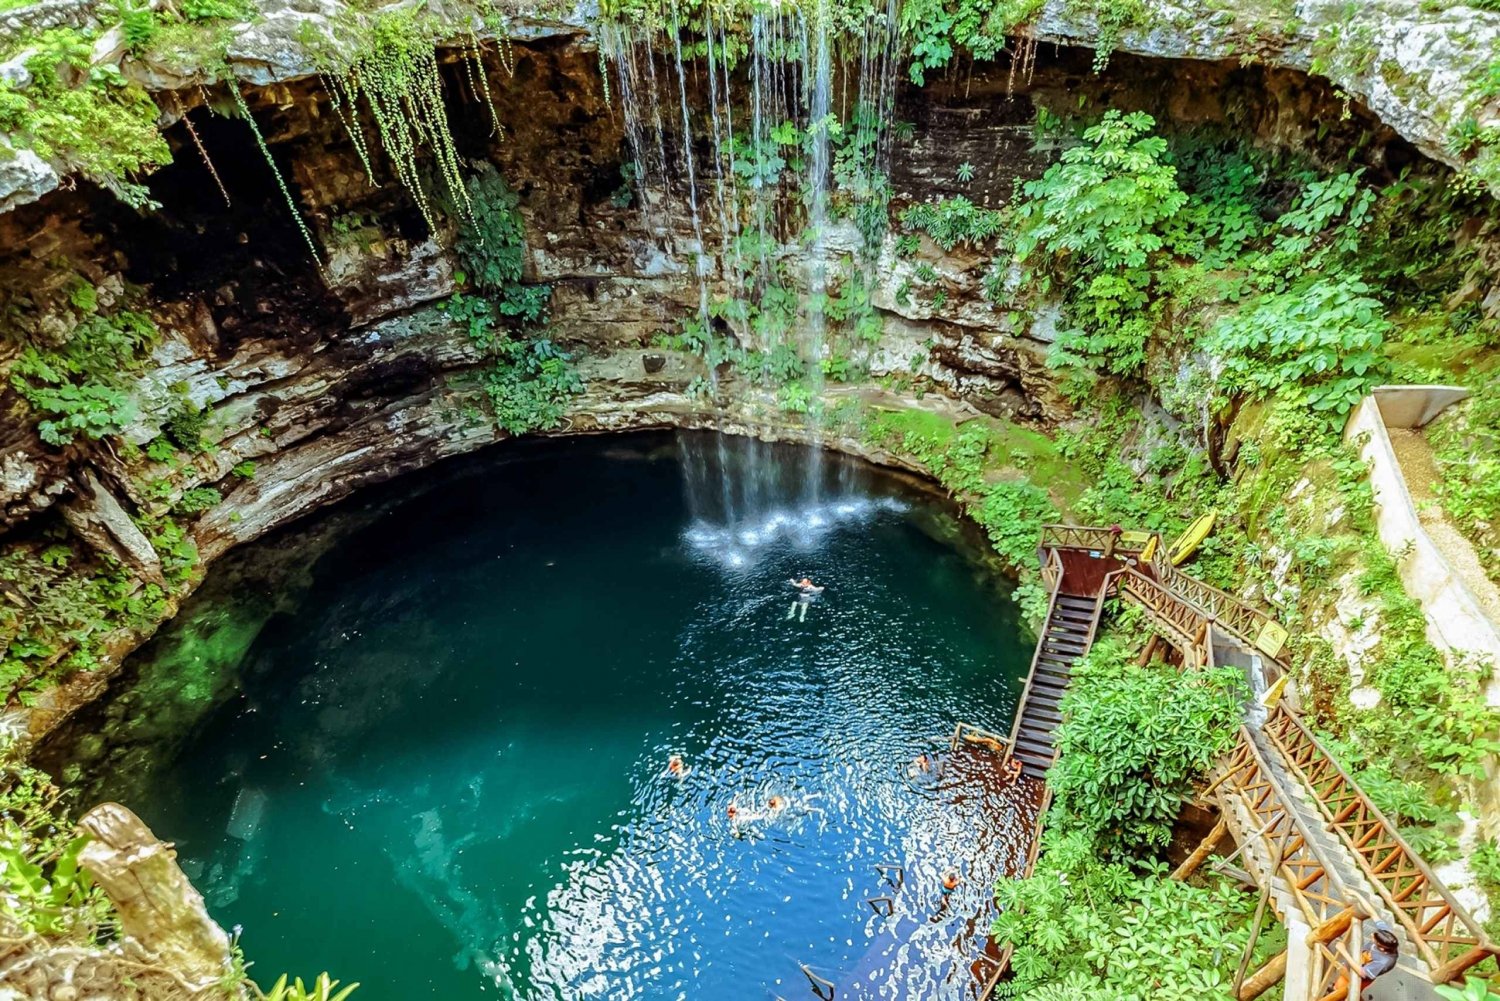 Riviera Maya: Chichen Itza, Cenote, and Valladolid Tour